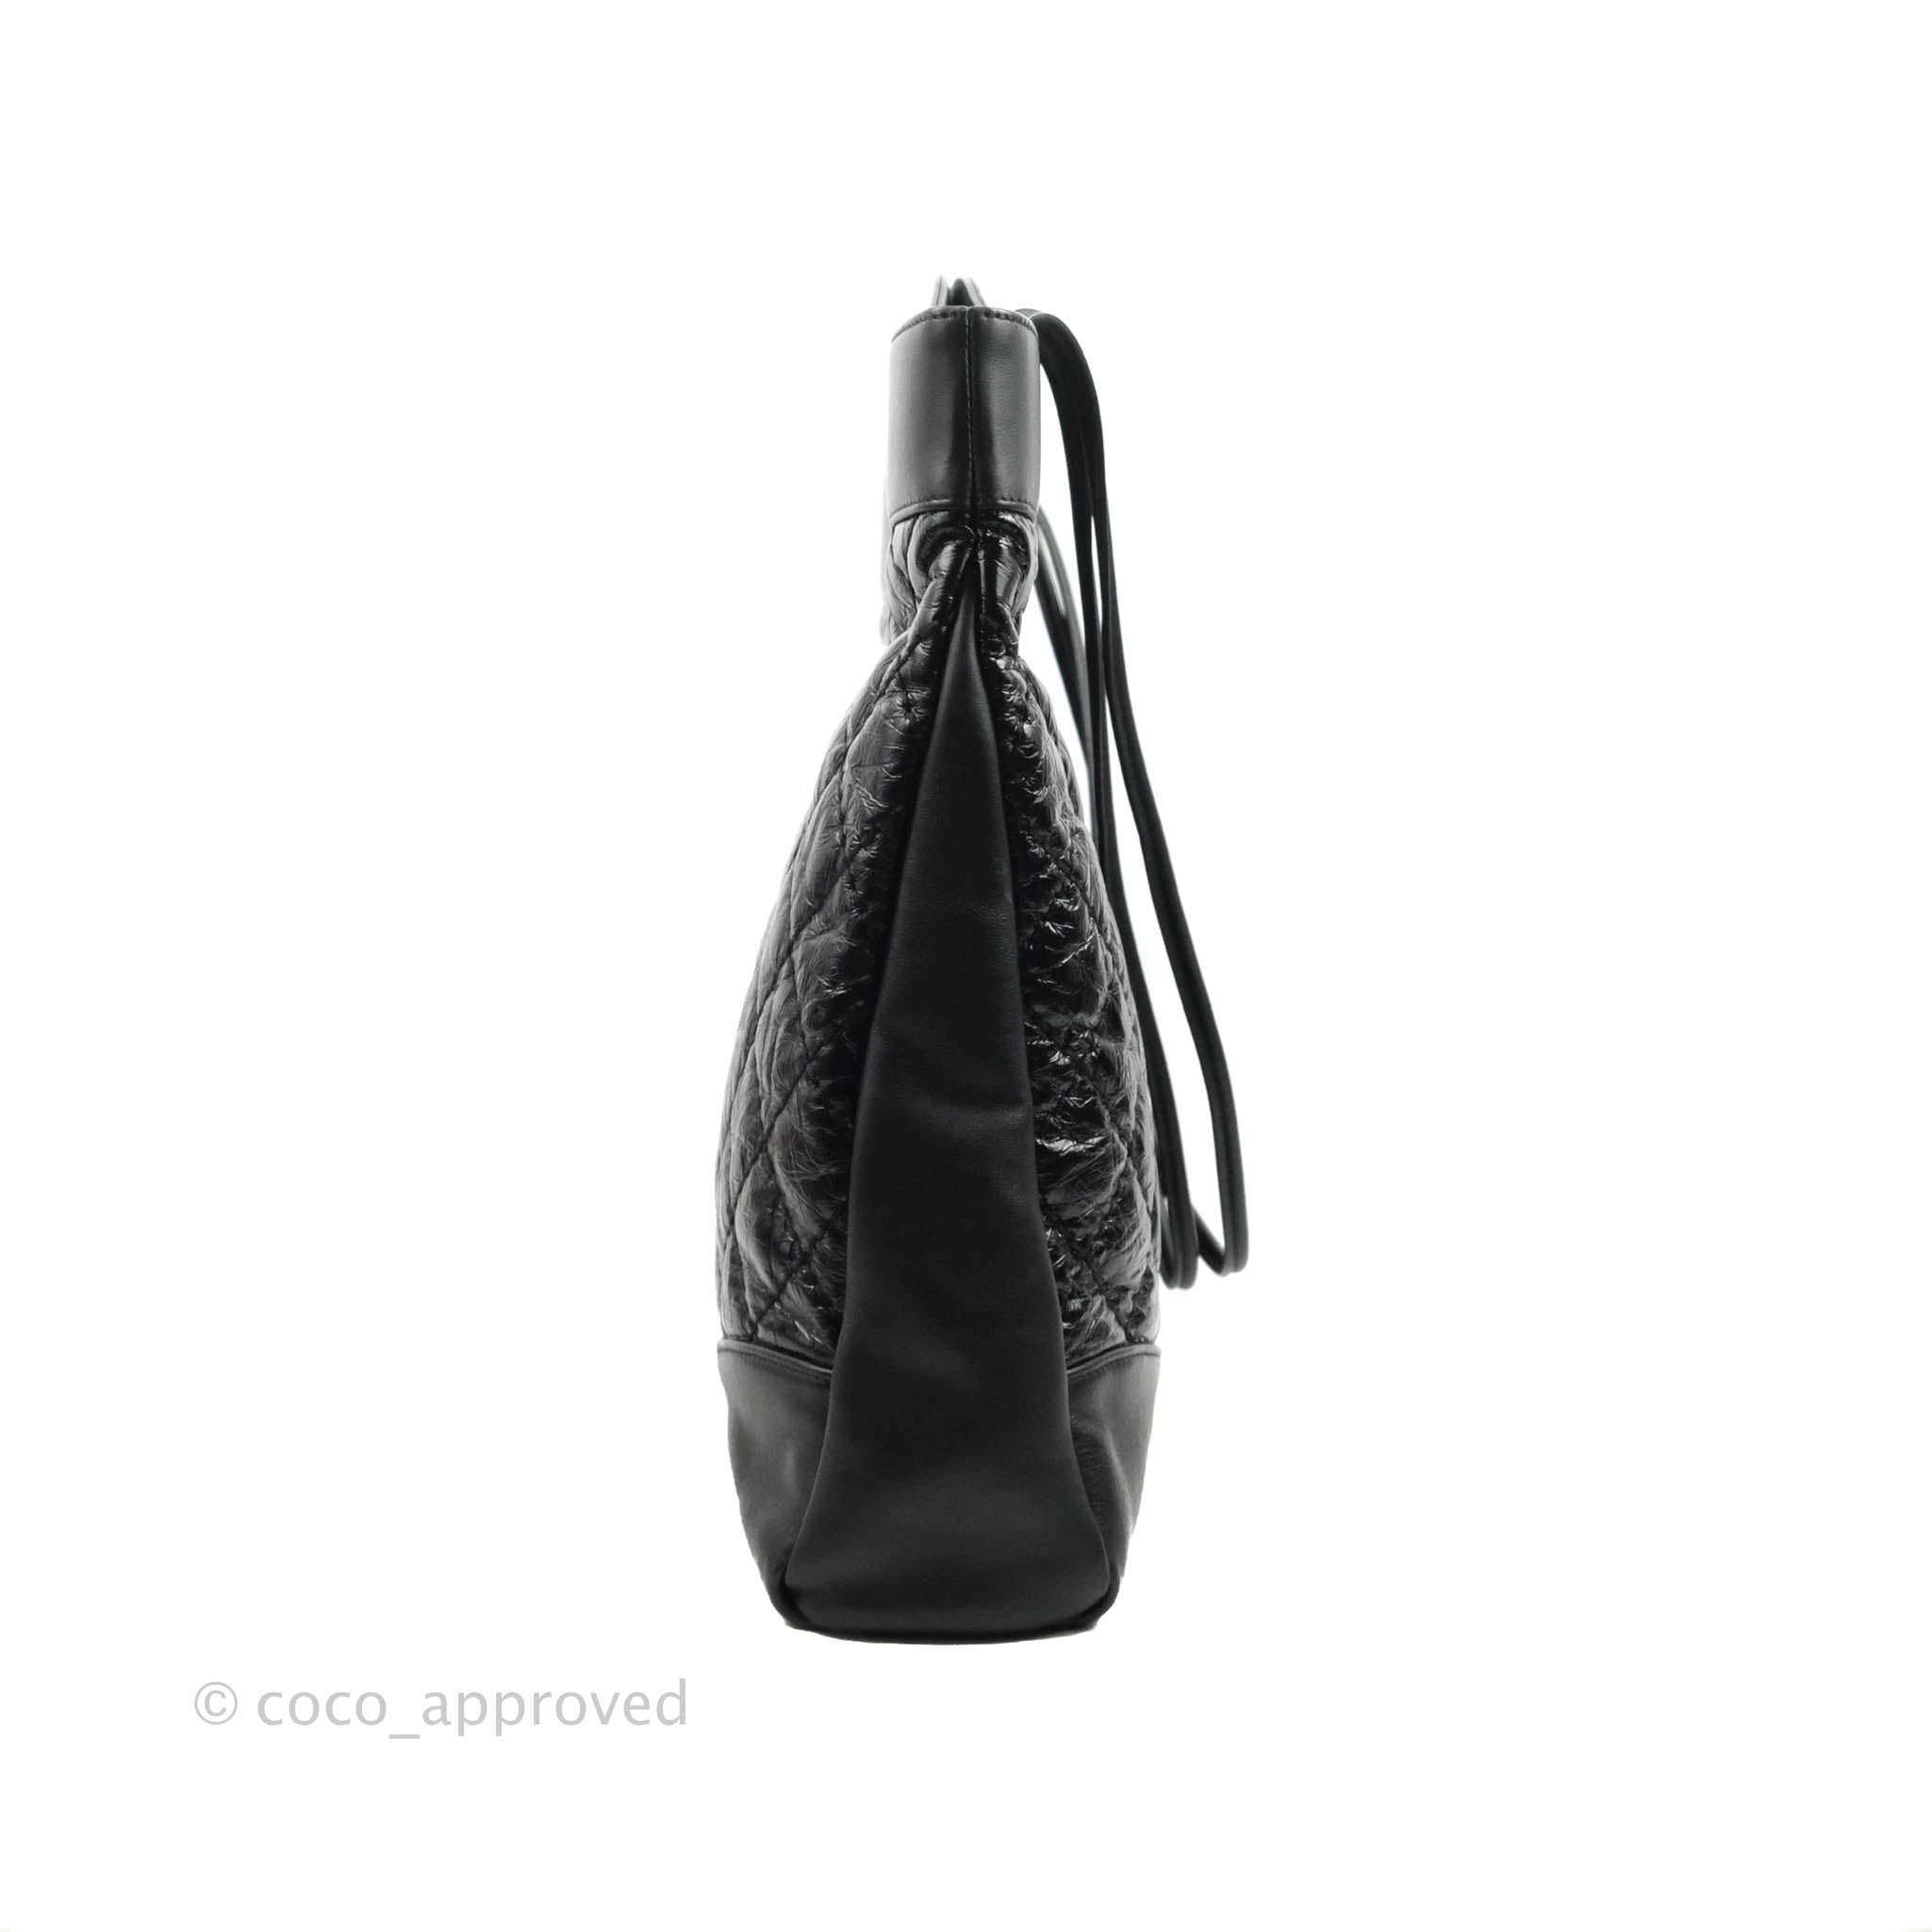 chanel shopping bag medium black